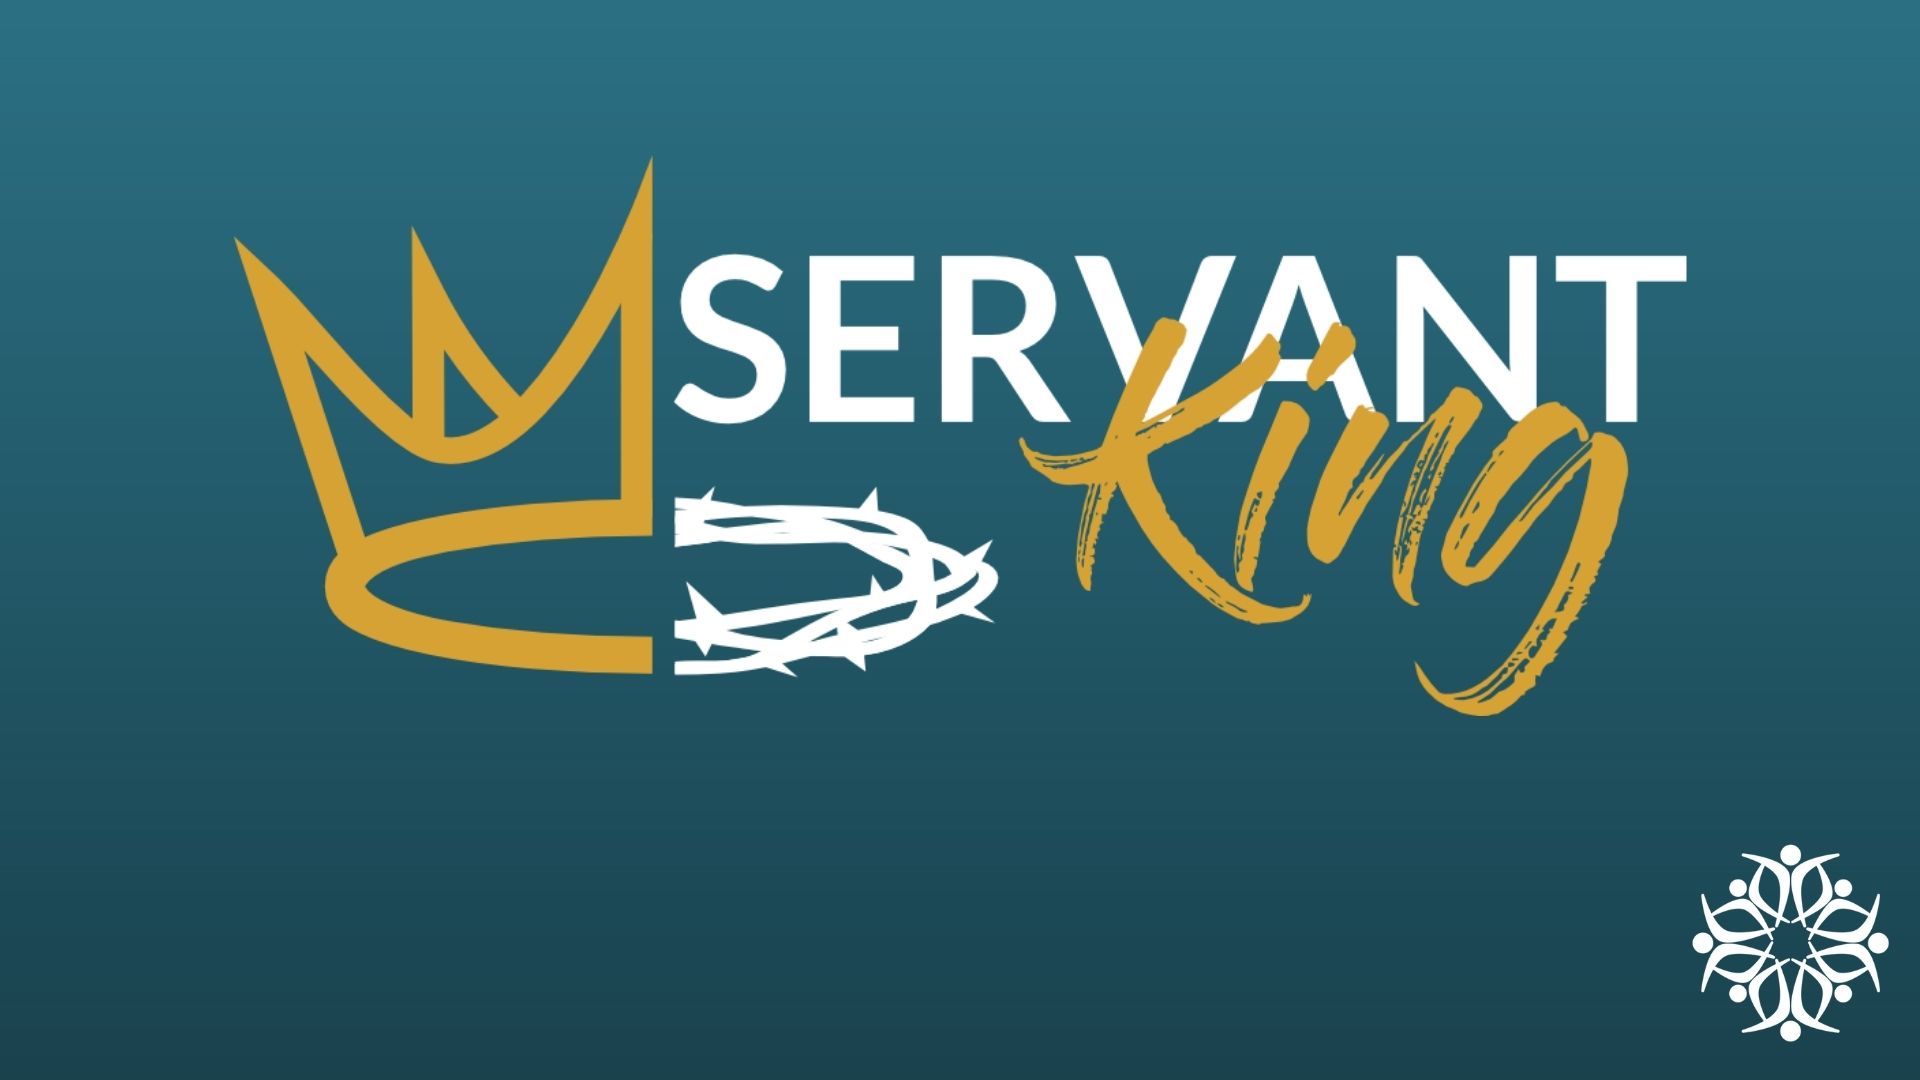 The Servant King’s Authority